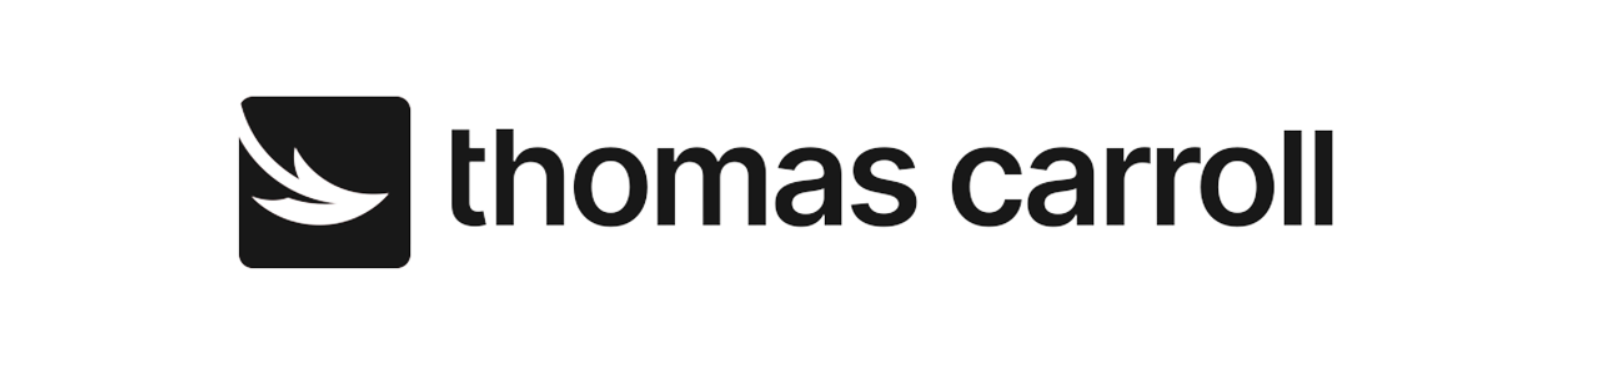 thomas carroll logo